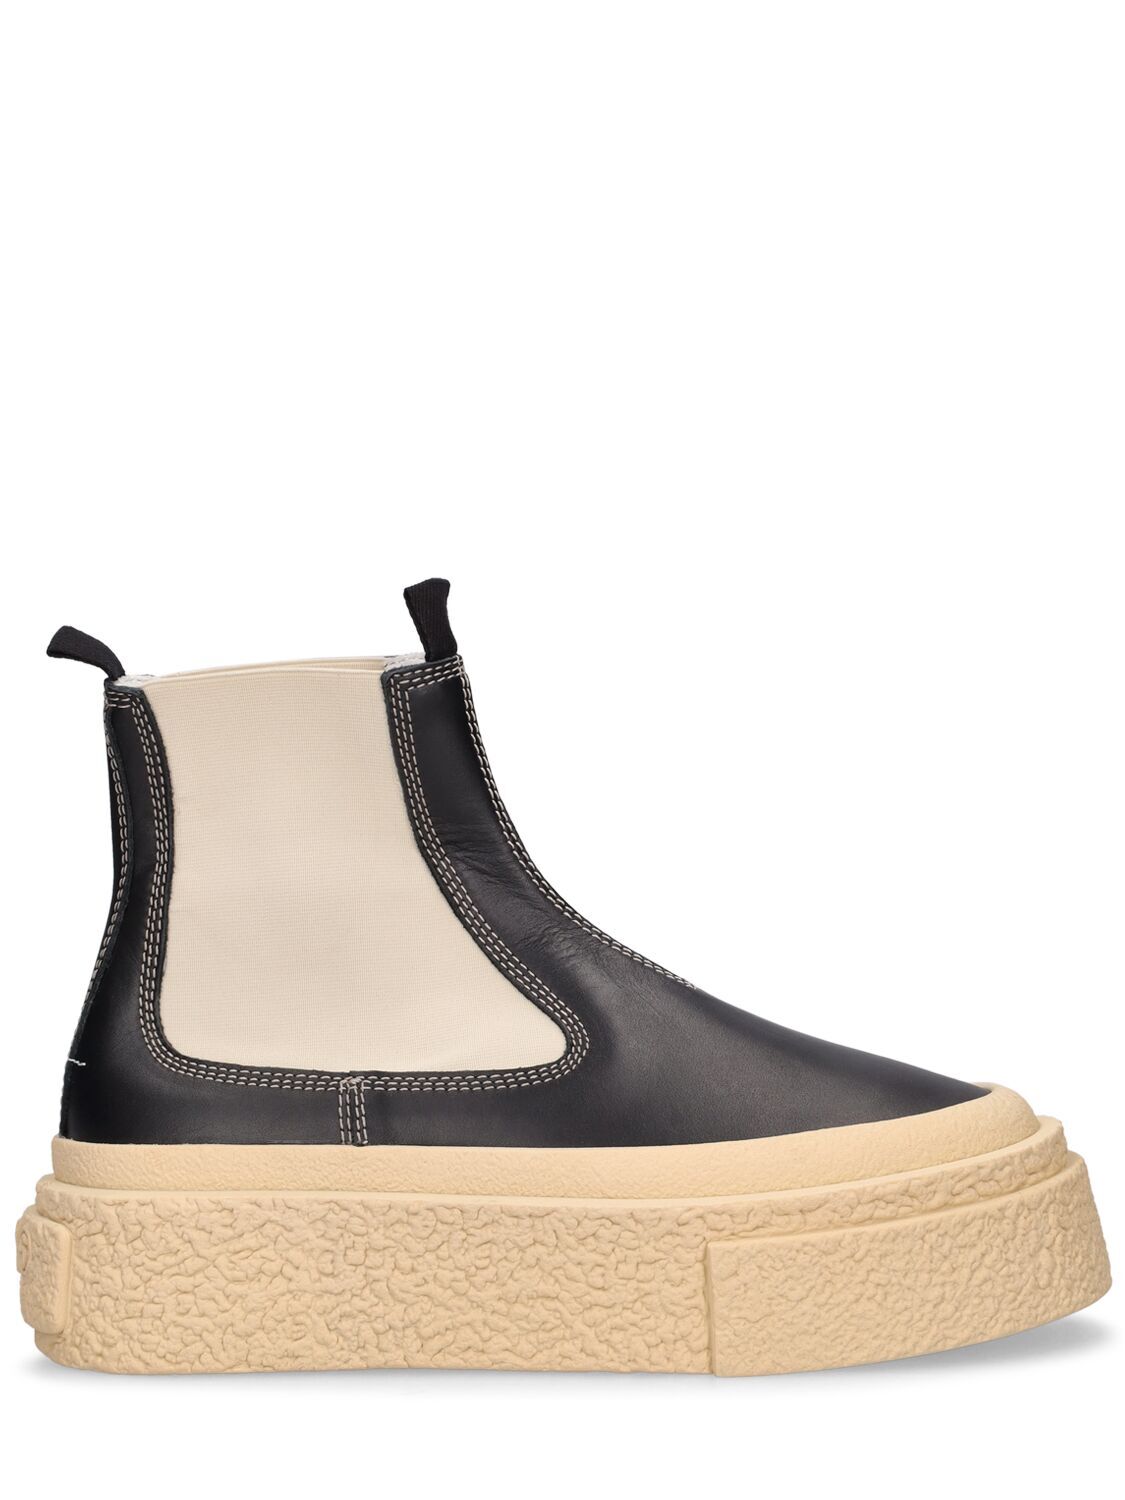 MM6 MAISON MARGIELA Leather Platform Ankle Boots in black / beige